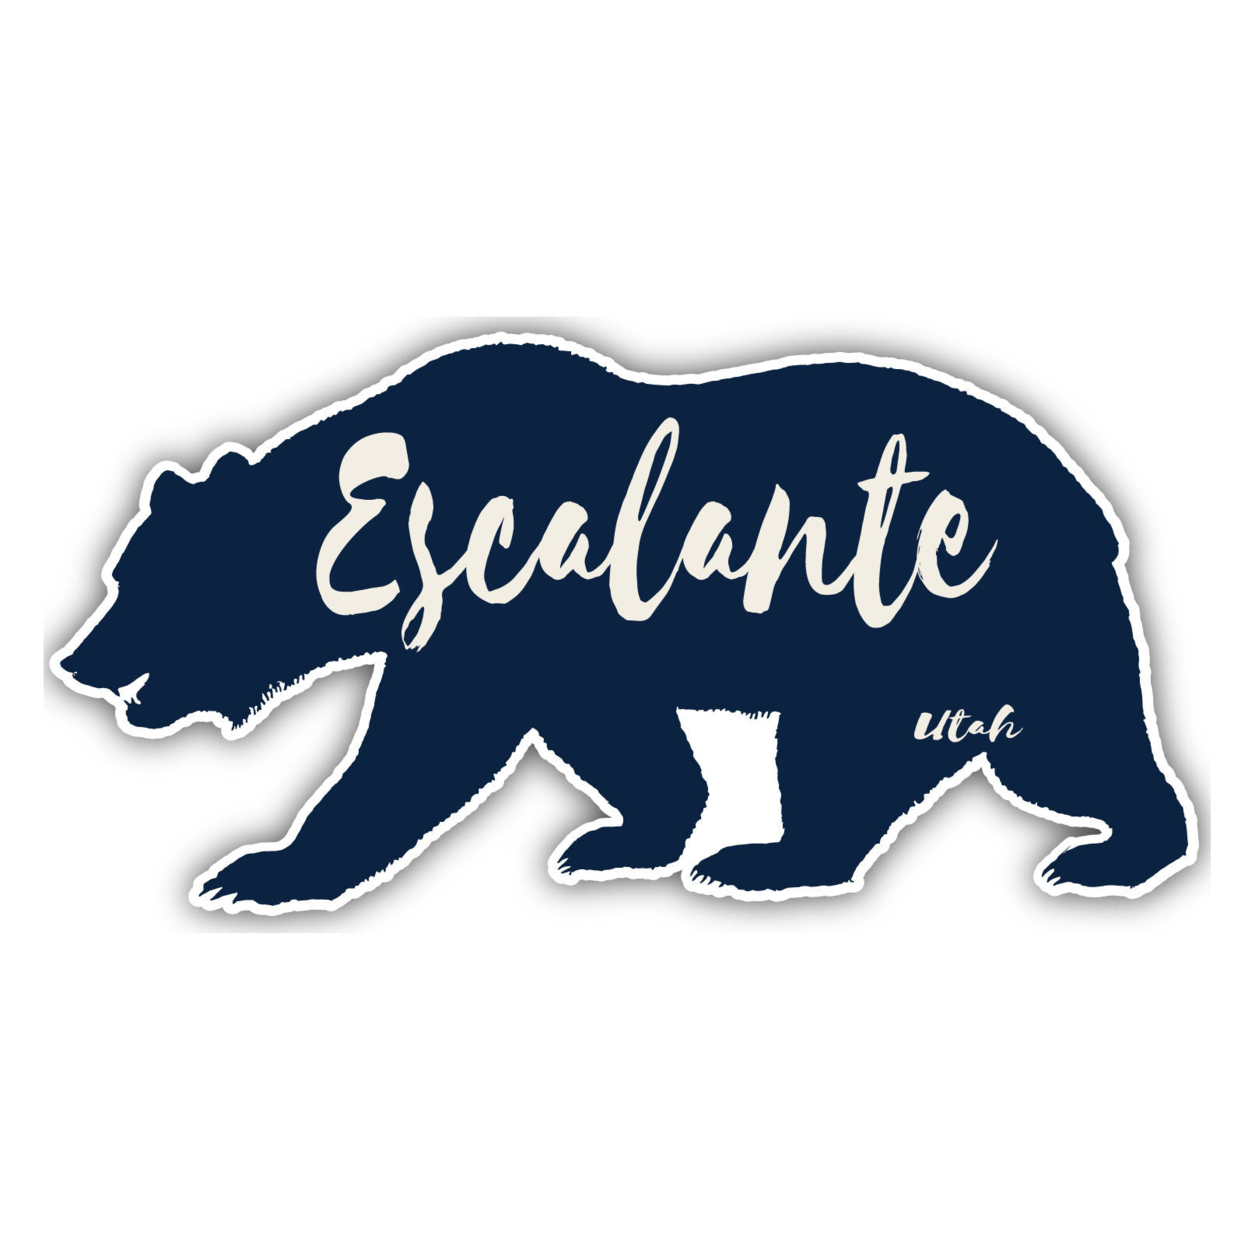 Escalante Utah Souvenir Decorative Stickers (Choose Theme And Size) - Single Unit, 12-Inch, Bear